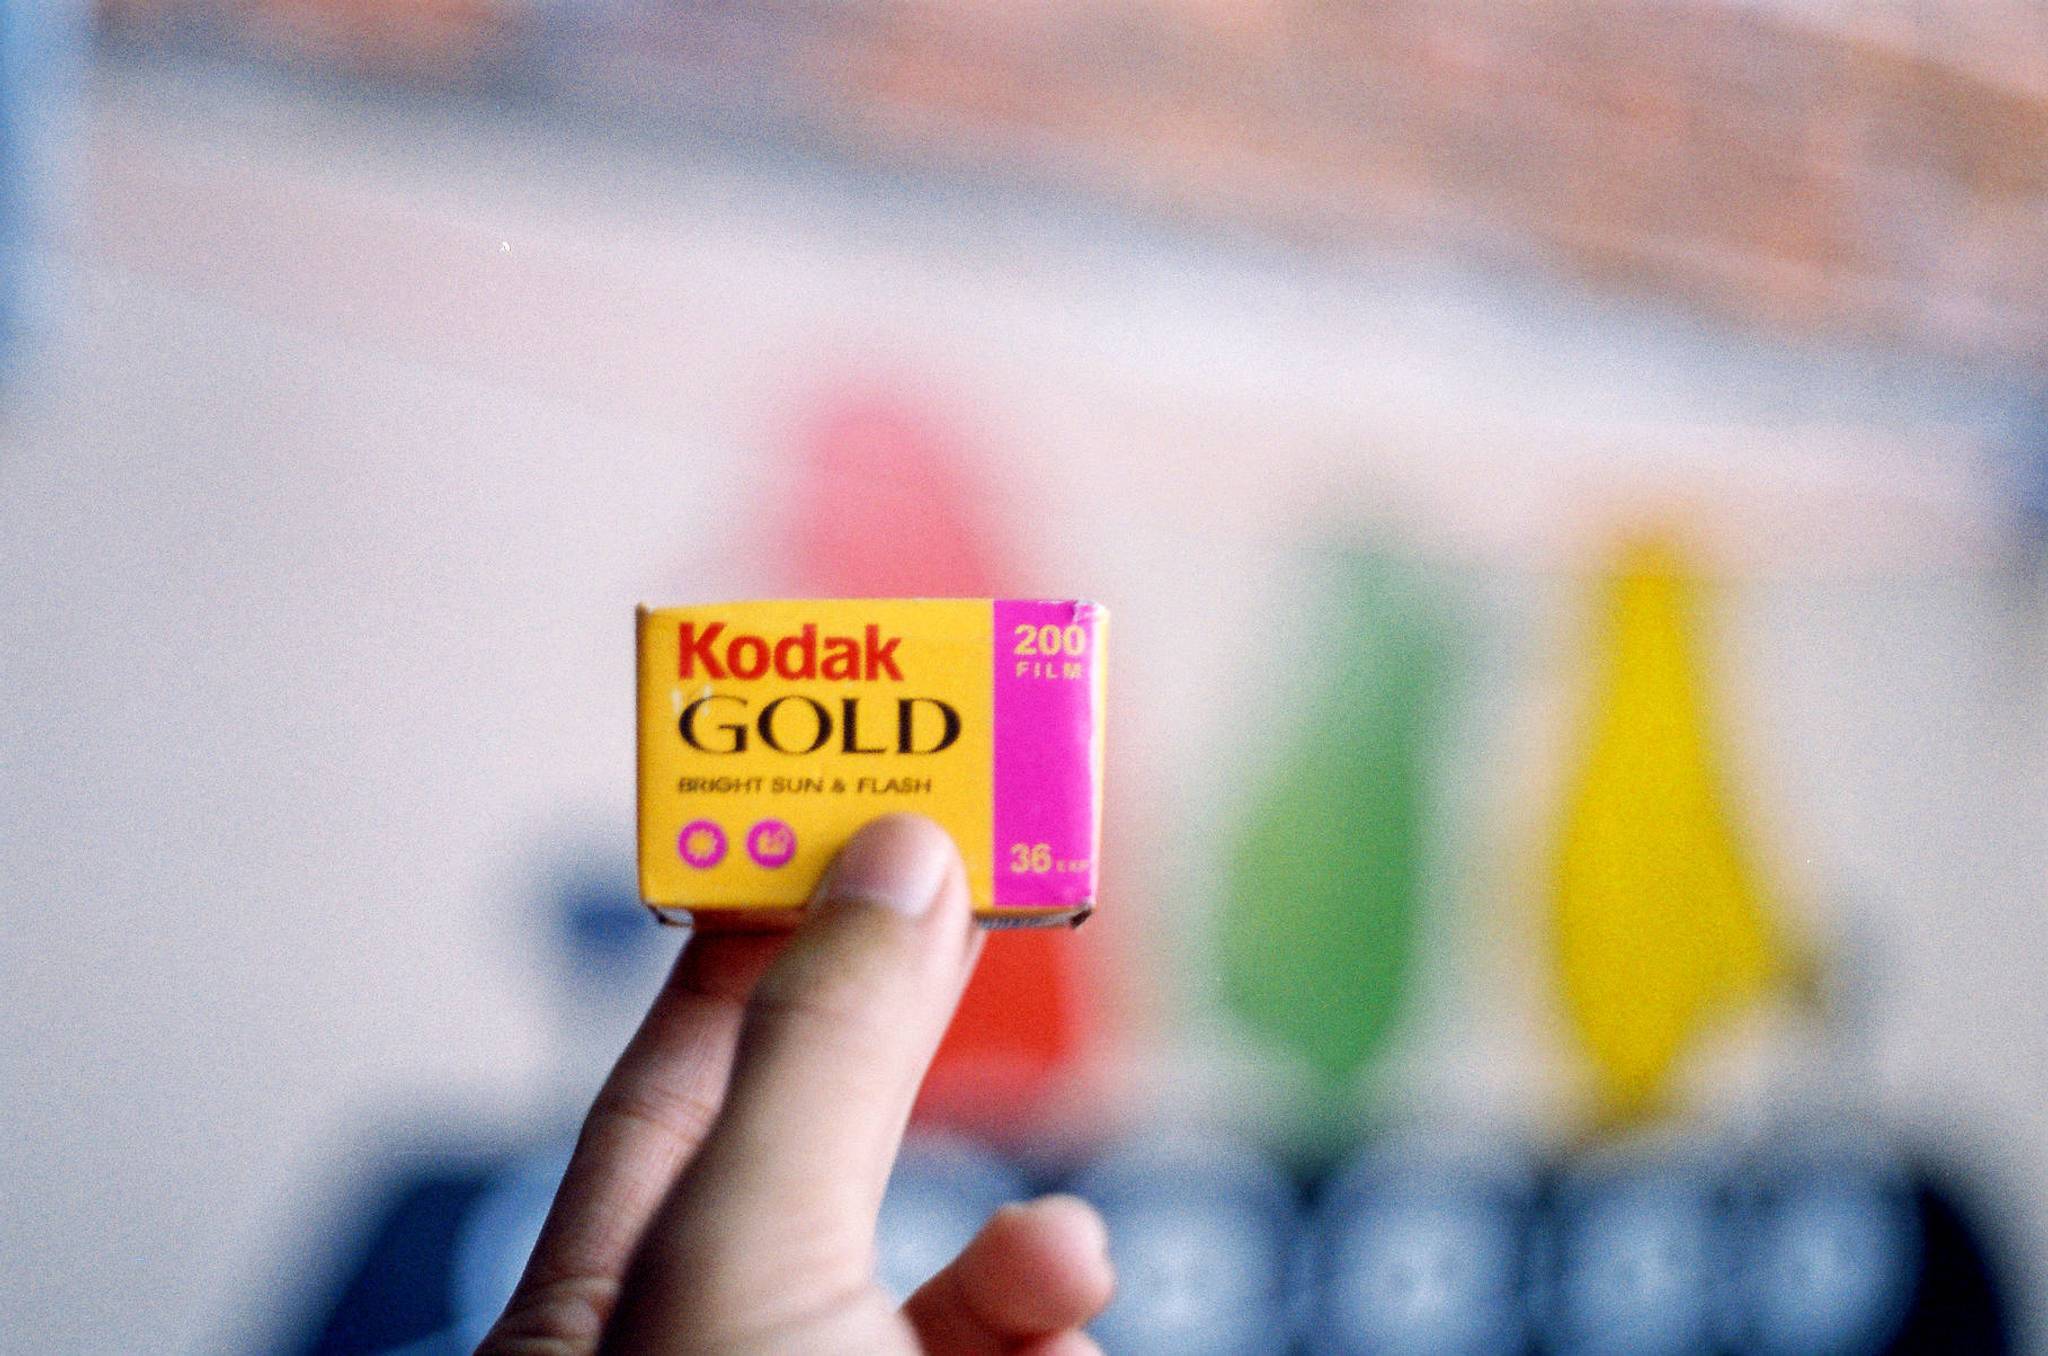 Kodak revives itself through tech innovation